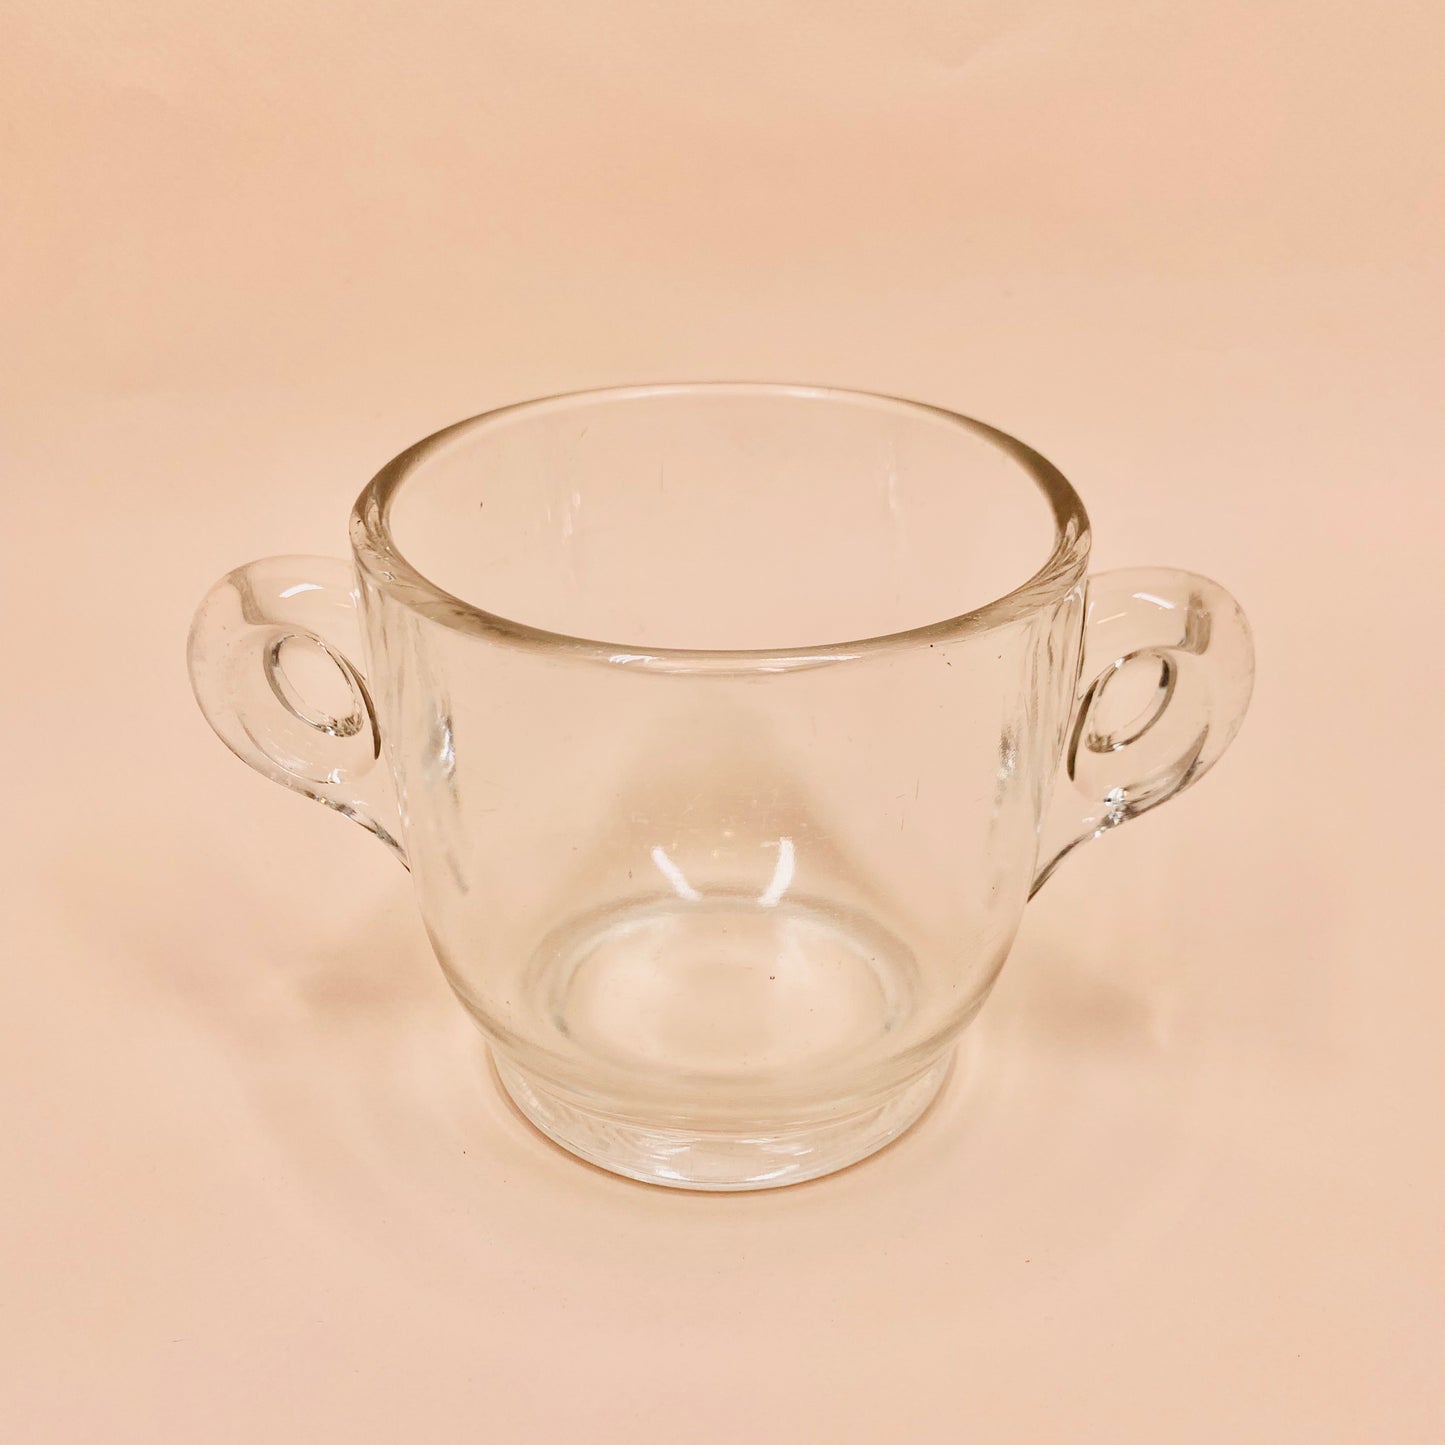 Antique hand made glass mini ice bucket